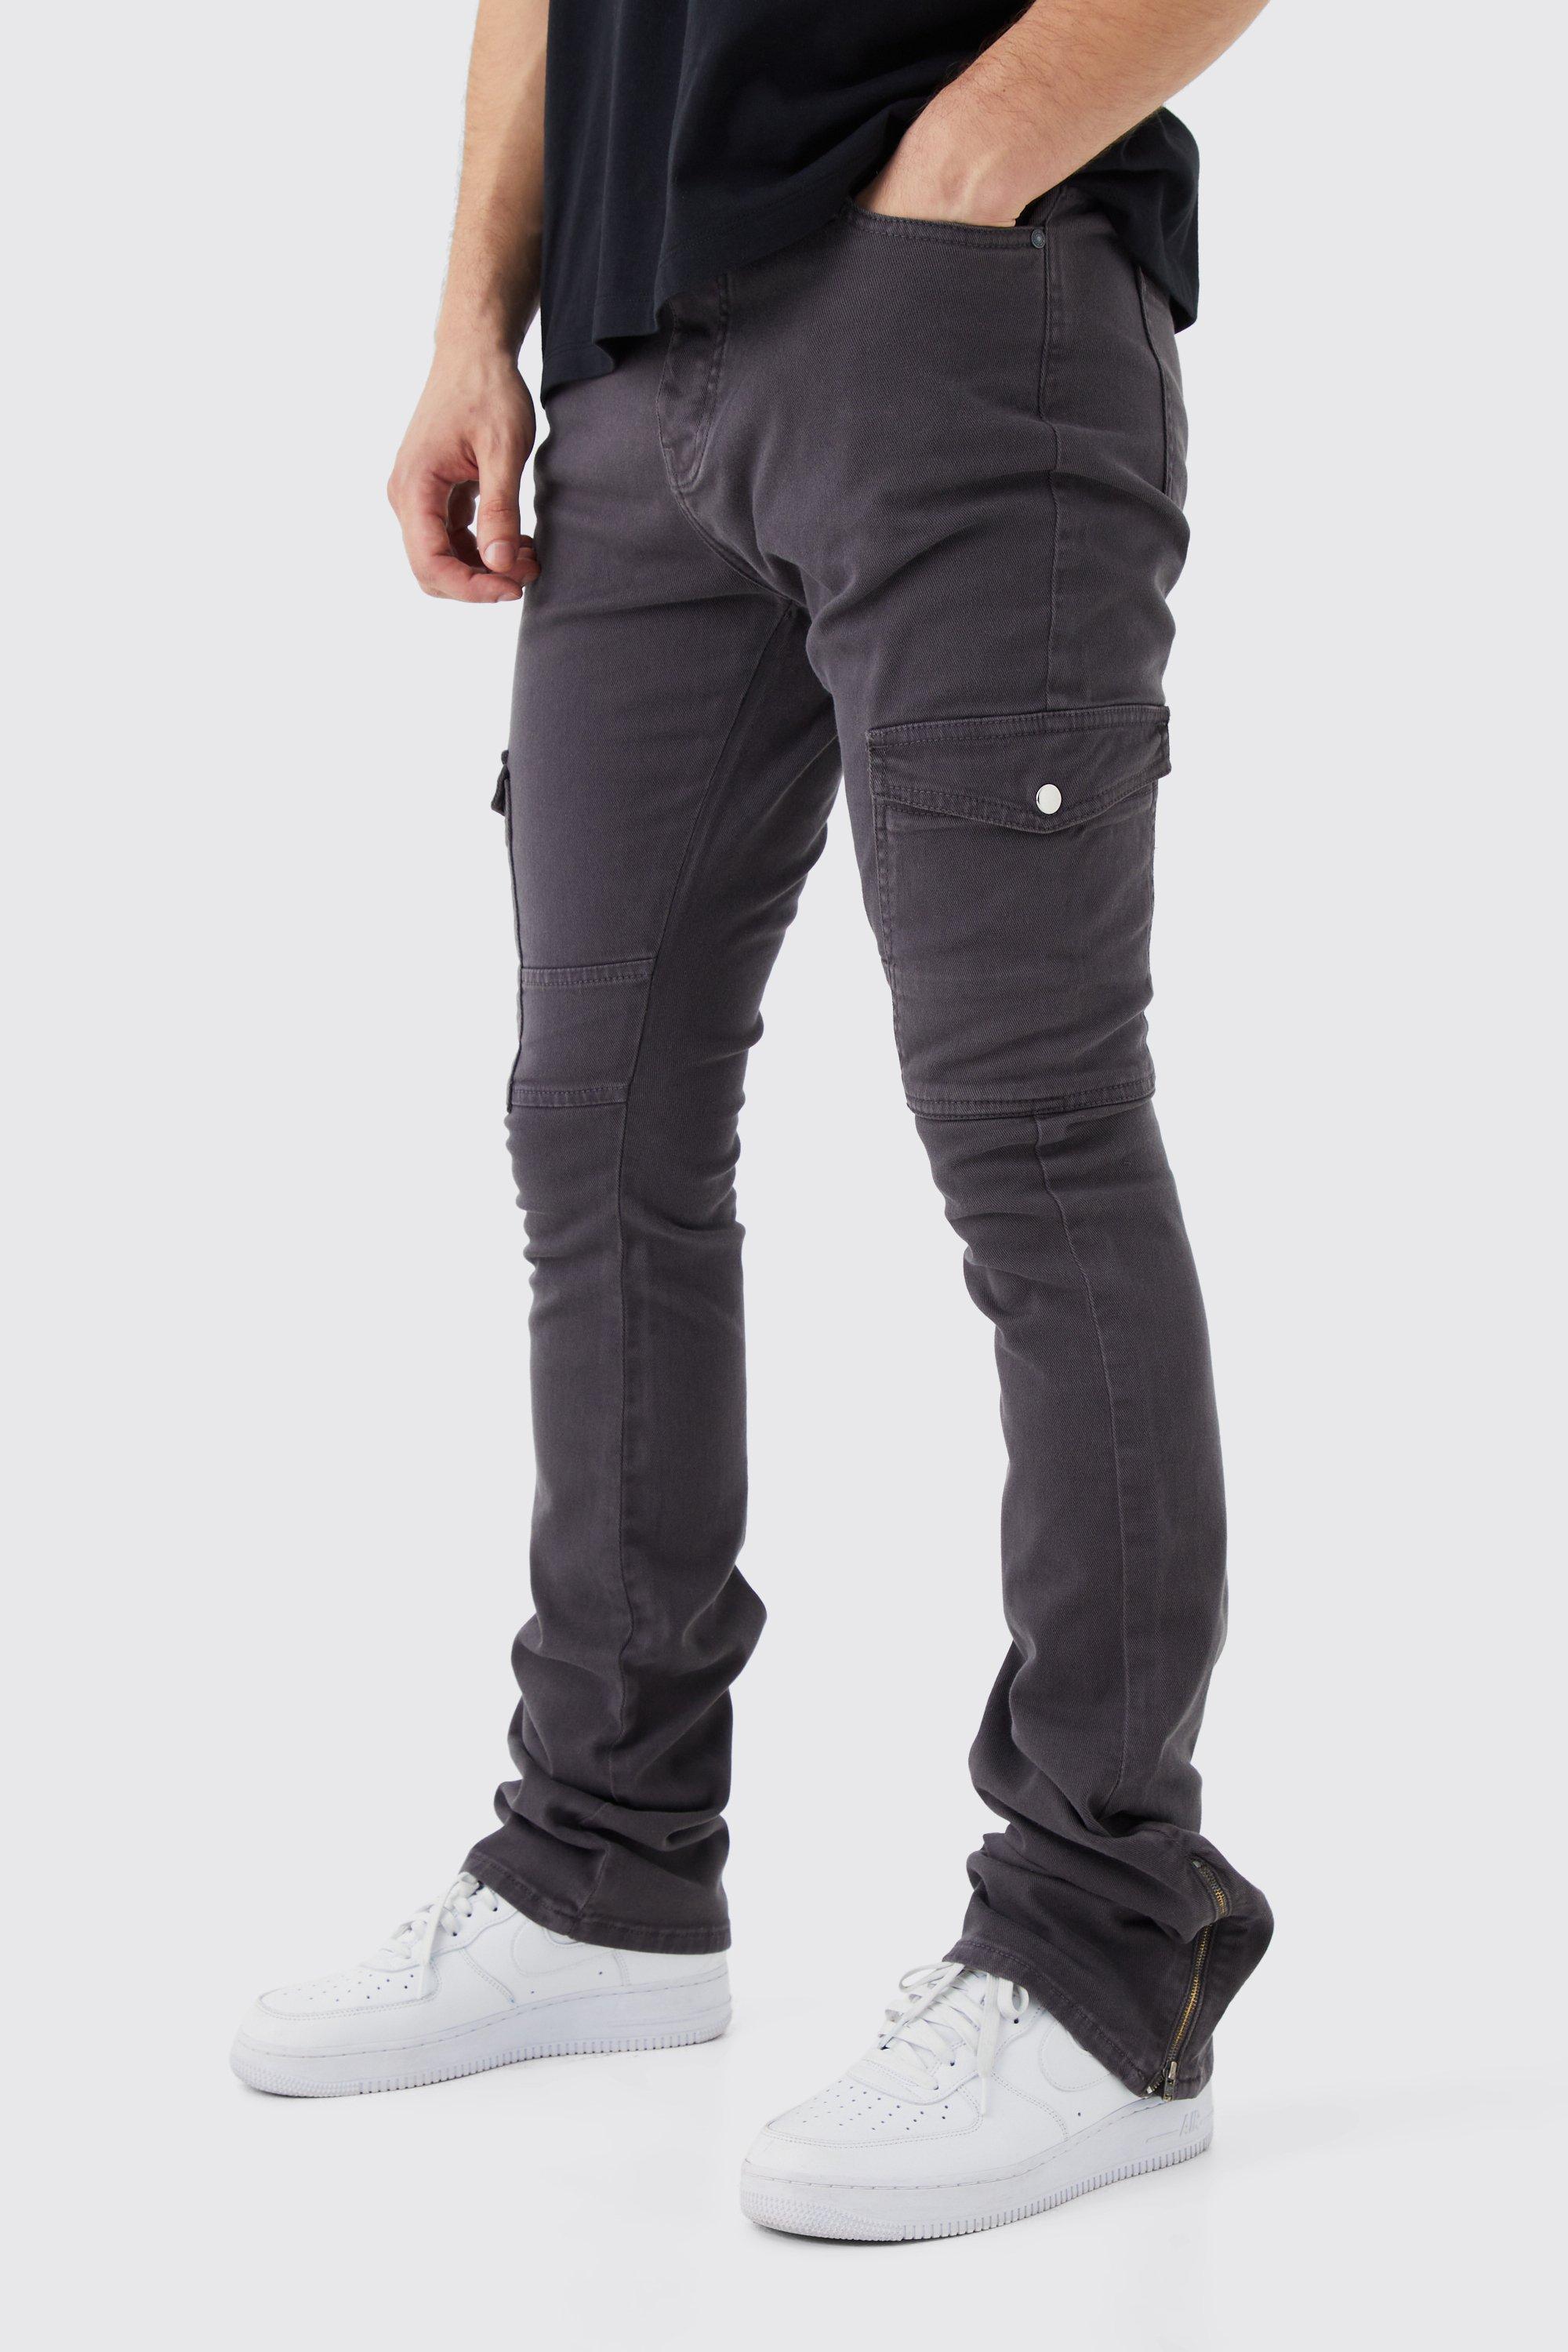 tall - pantalon cargo zippé homme - gris - 30, gris